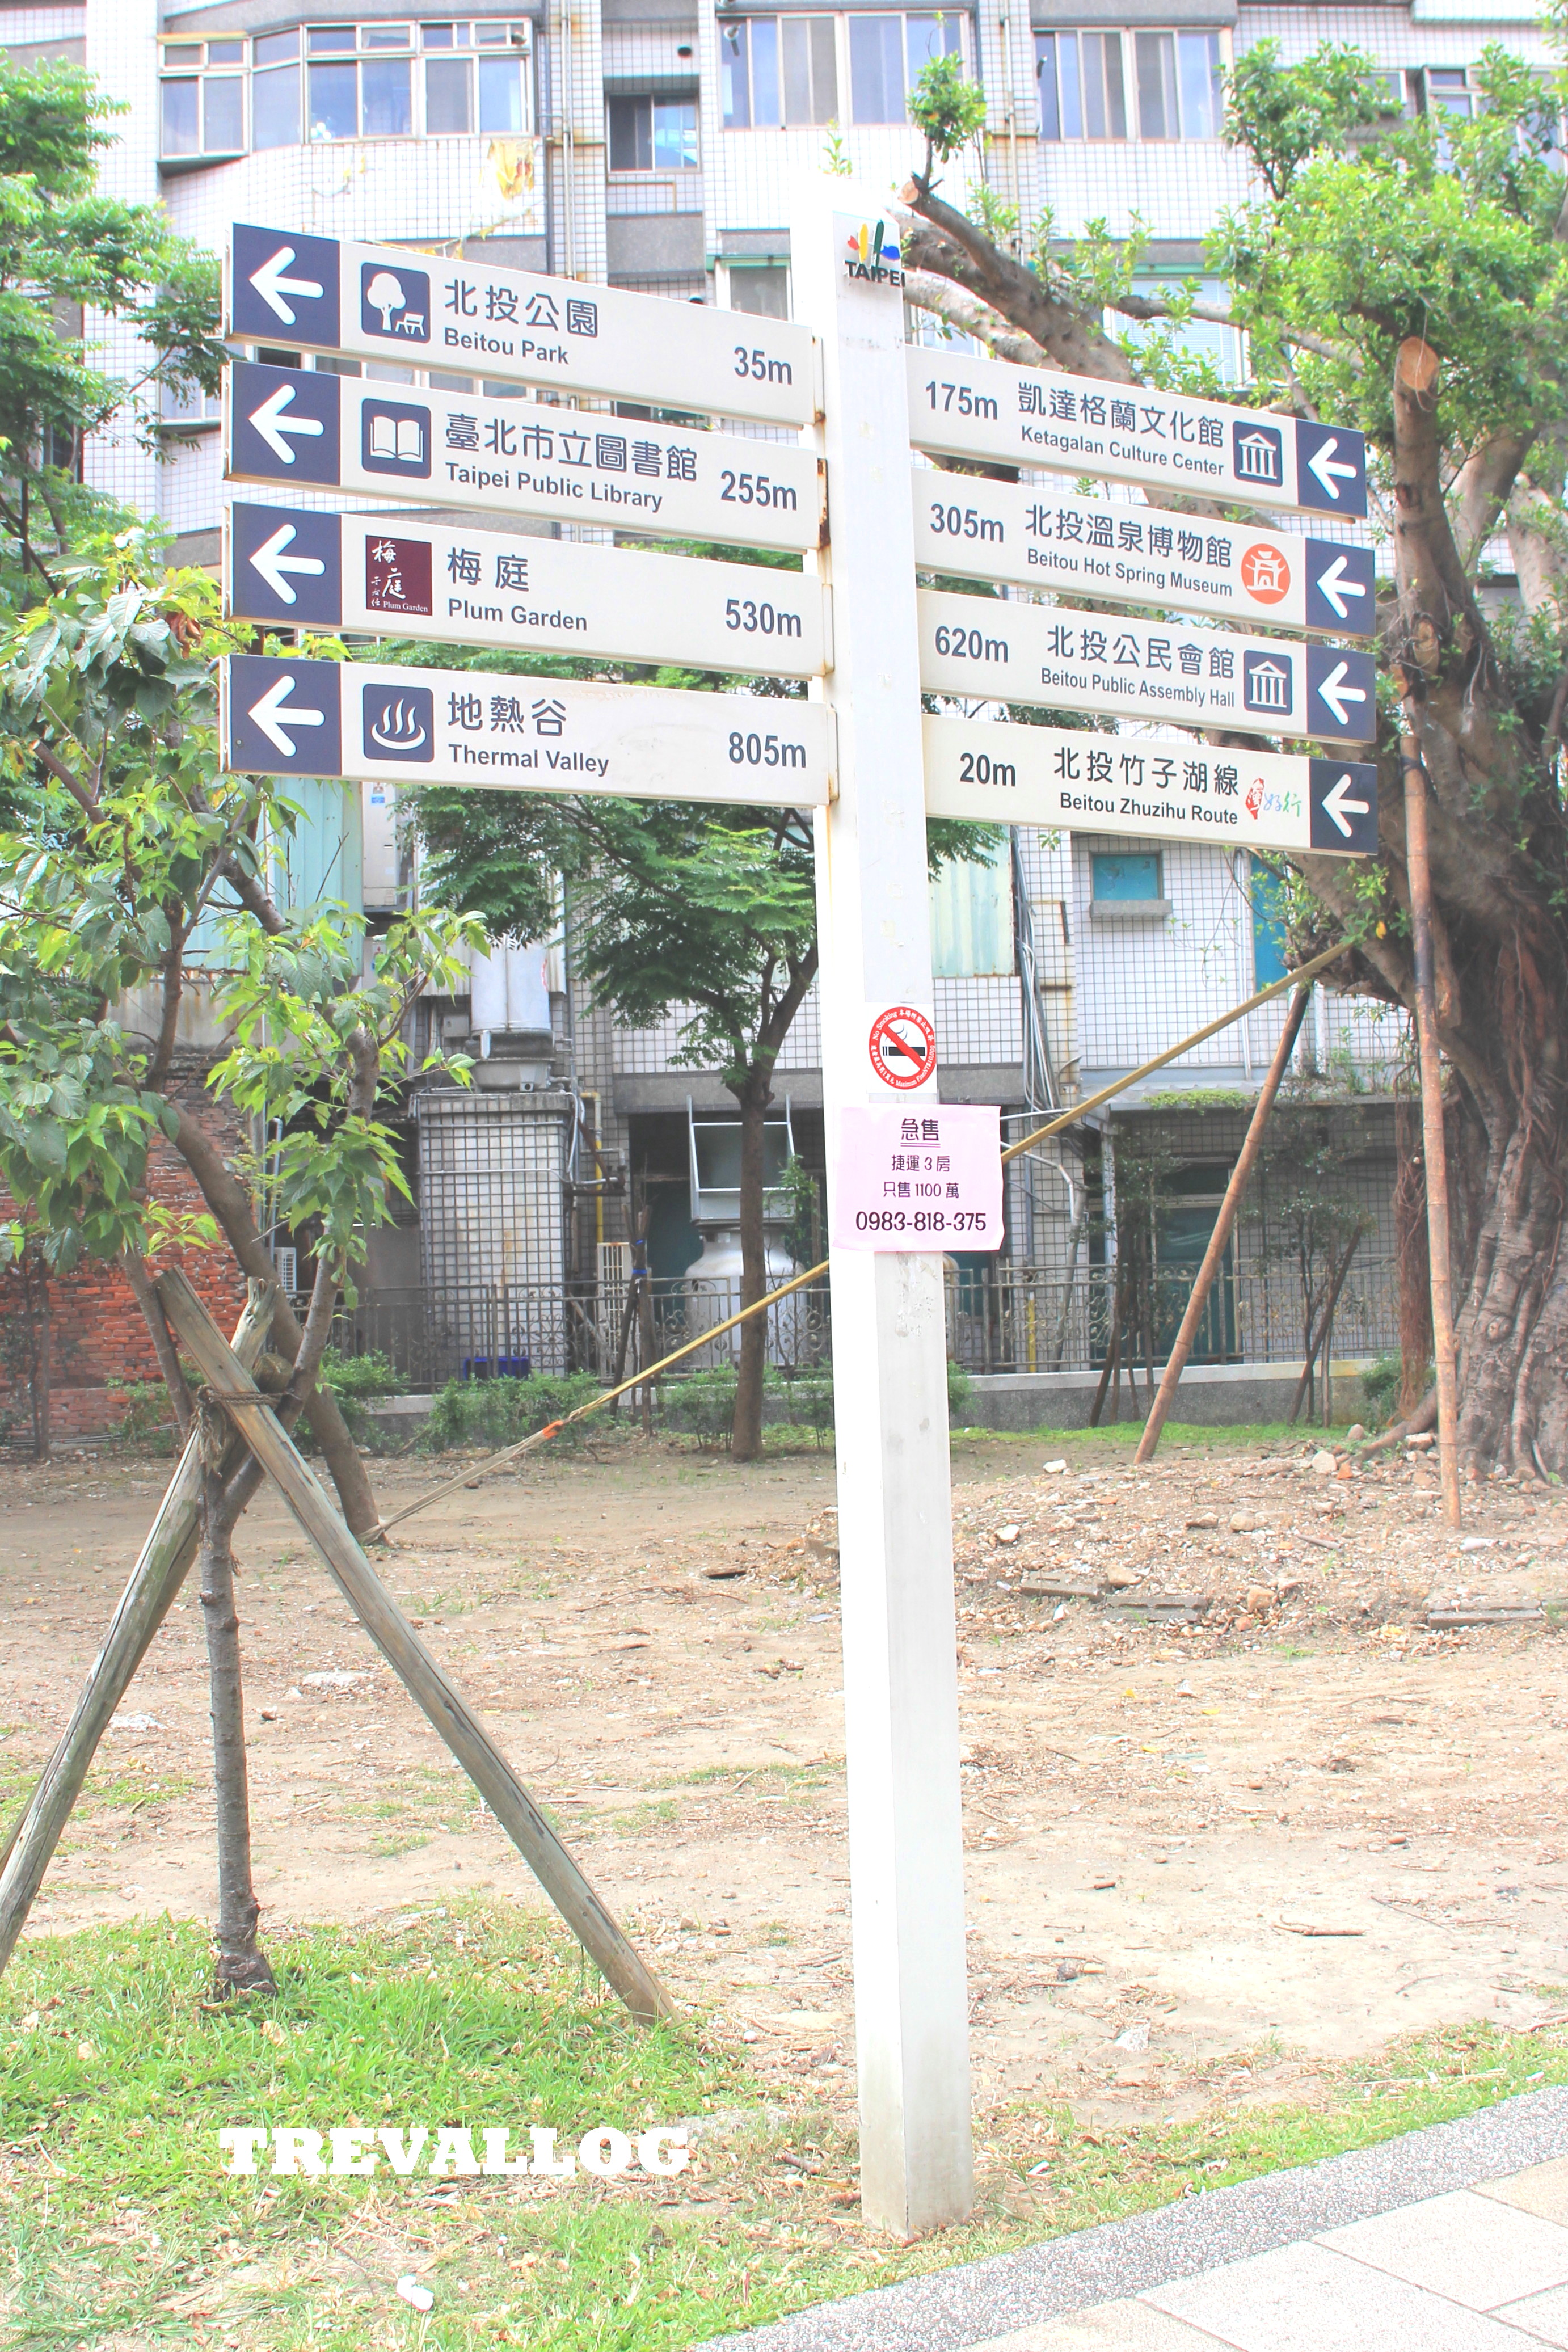 Signage at xinbeitou area, Taipei, Taiwan